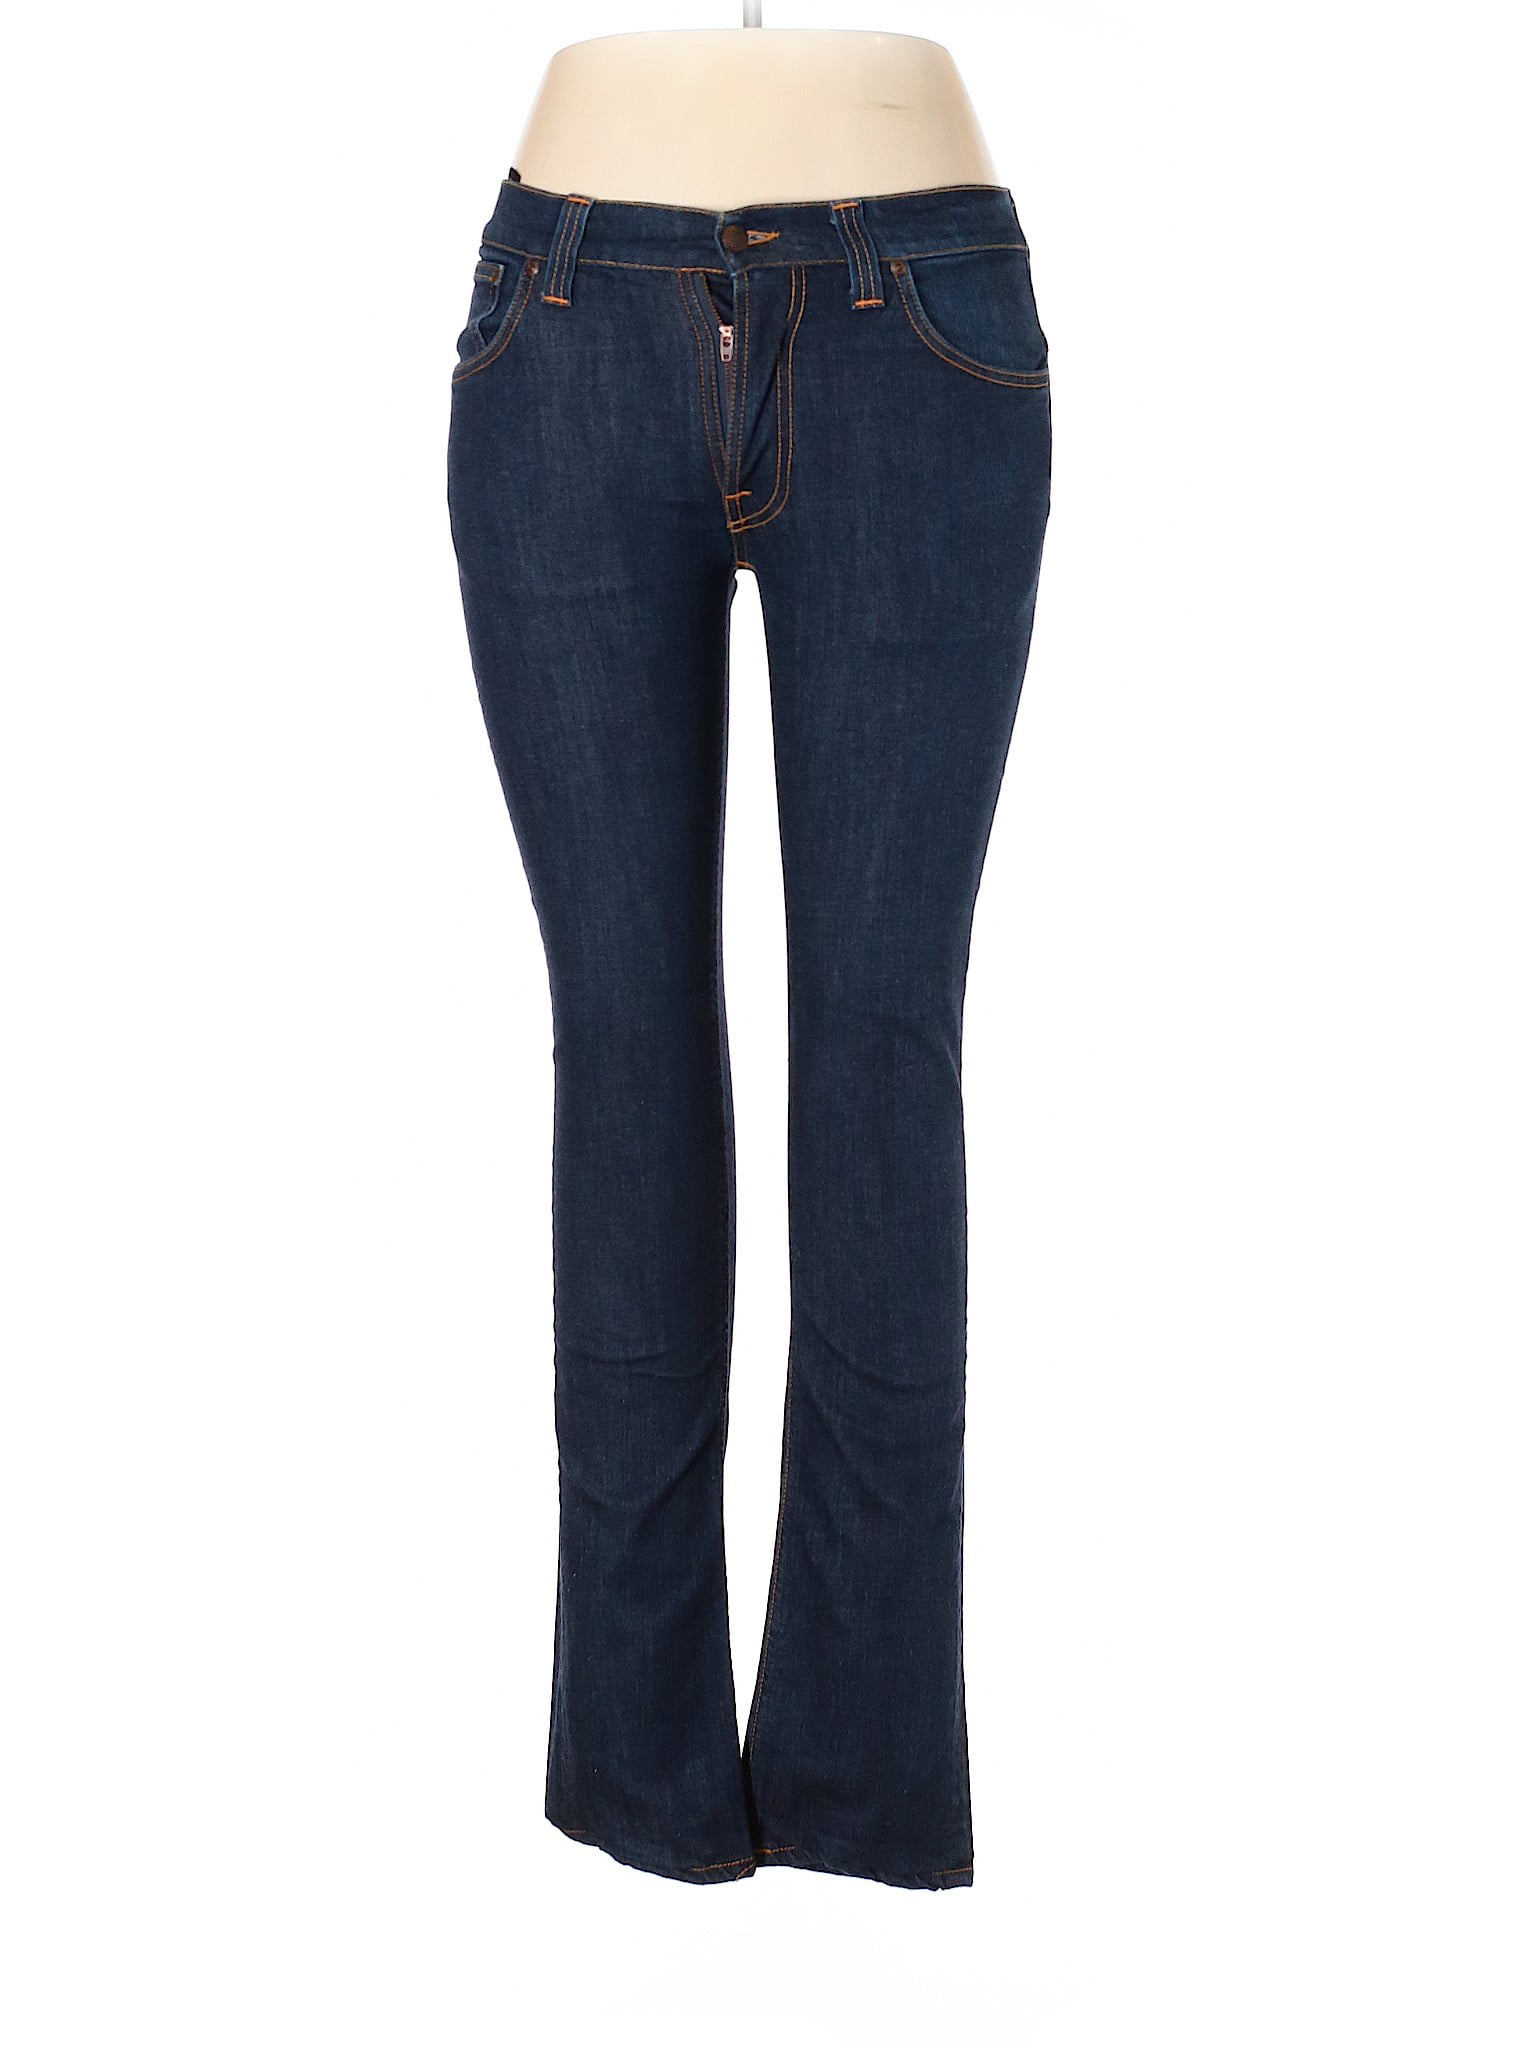 Nudie Jeans - Pre-Owned Nudie Jeans Women's Size 33W Jeans - Walmart ...